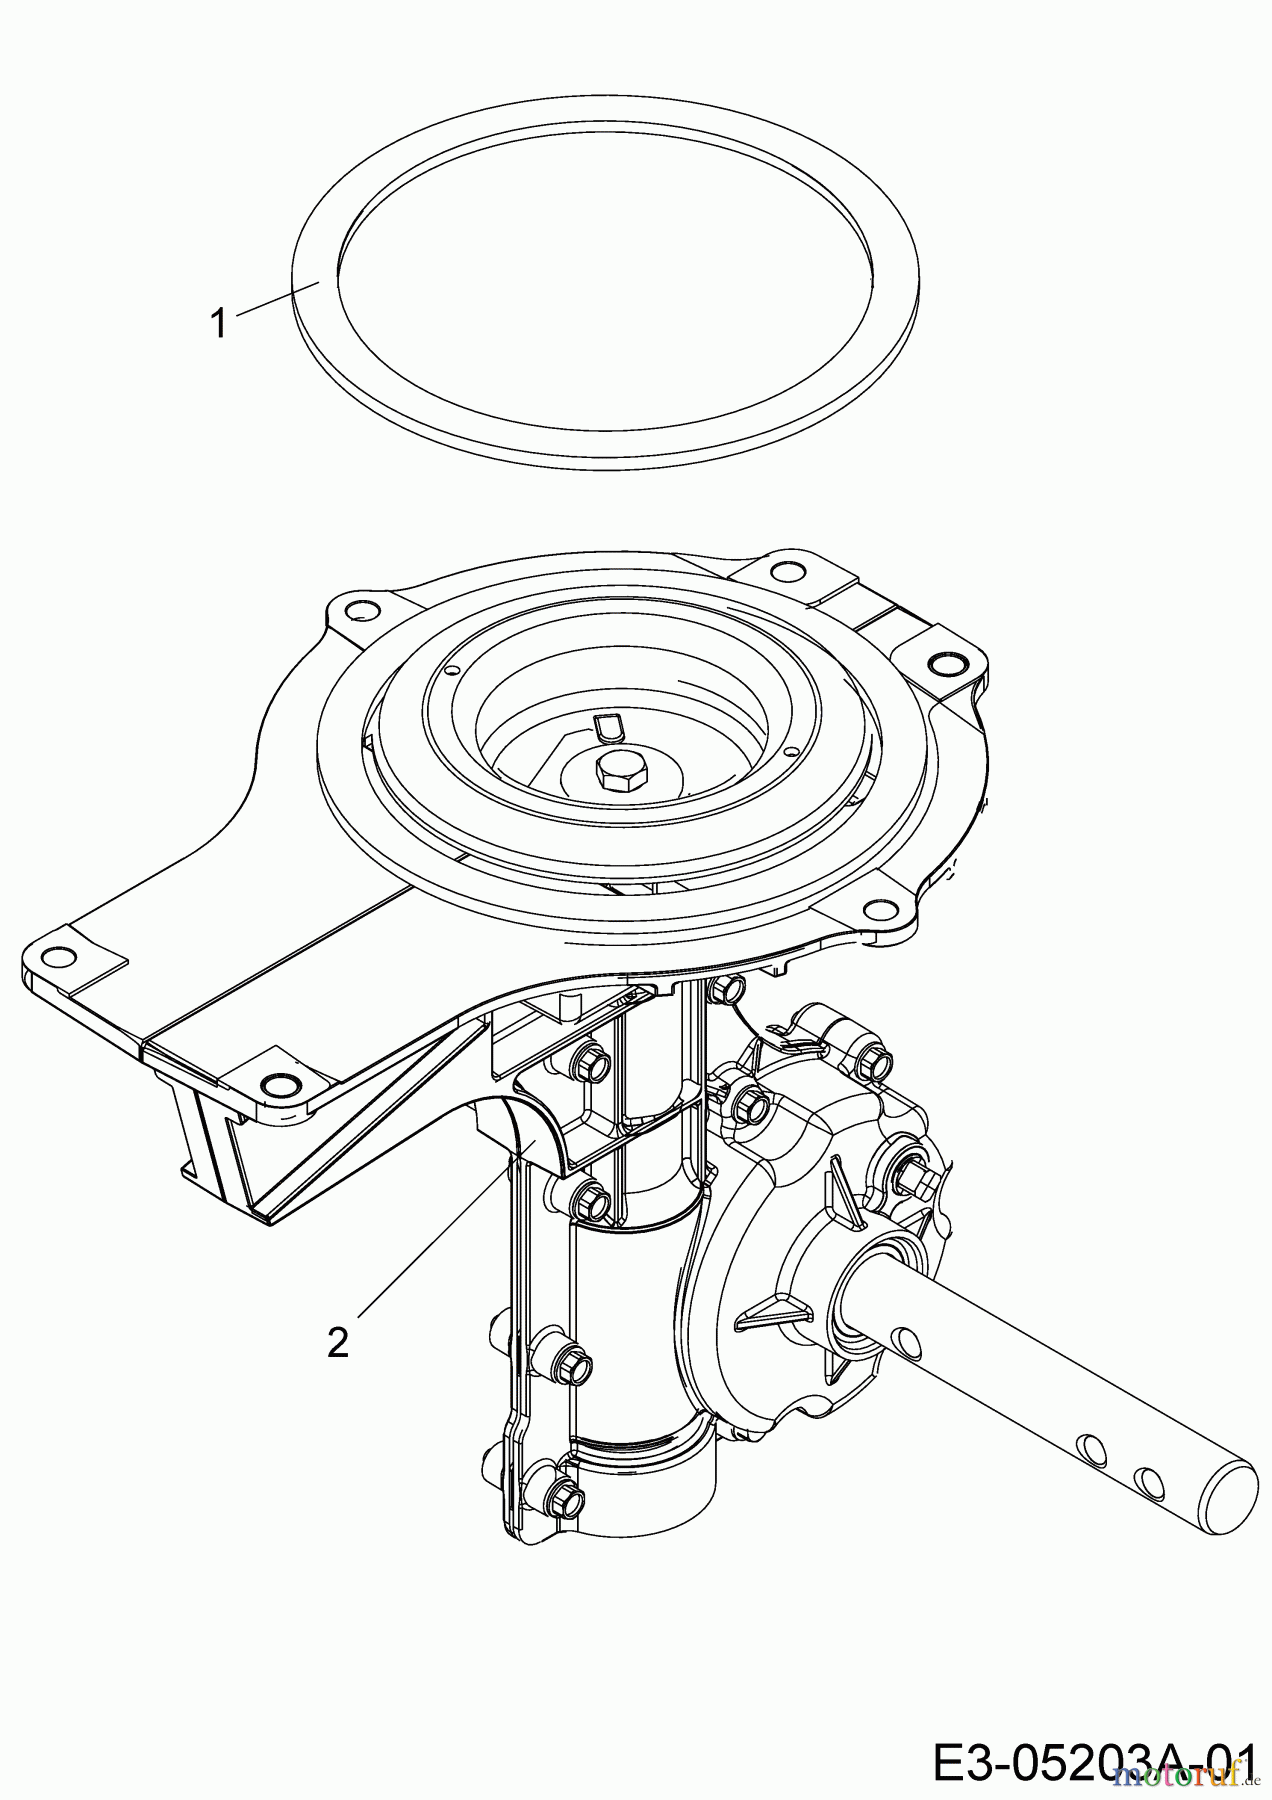  Wolf-Garten Motorhacken T 61 B 21A-252F650  (2014) Getriebe